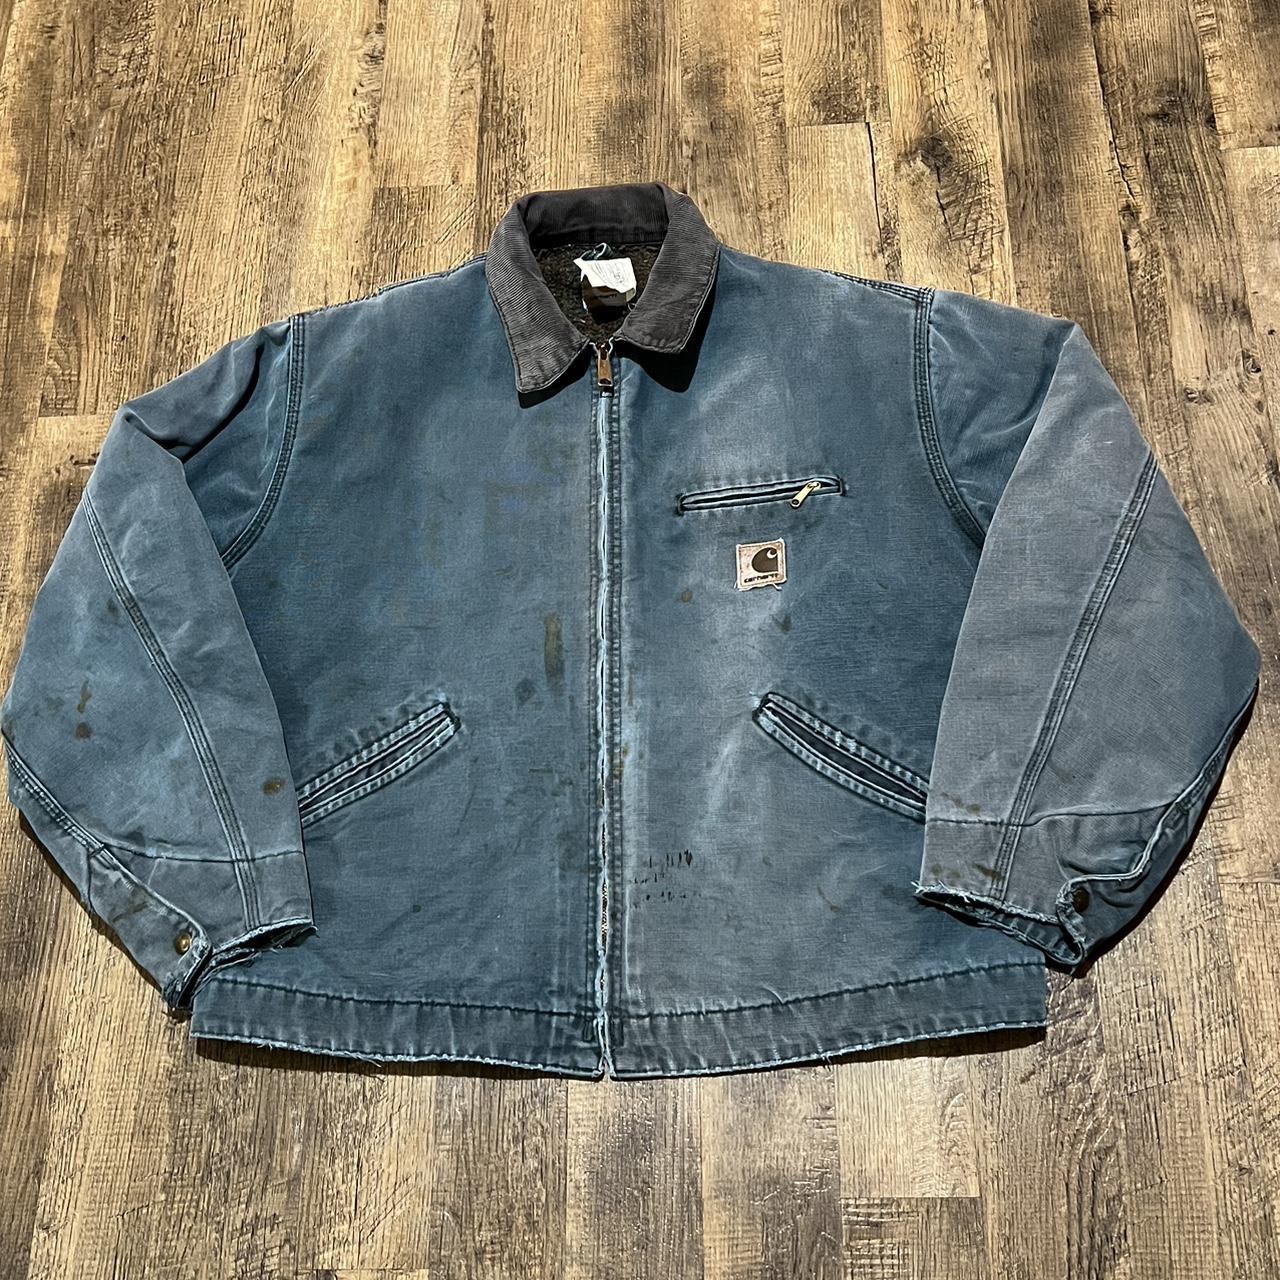 Vintage 90s Carhartt Detroit jacket Teal/Green work... - Depop